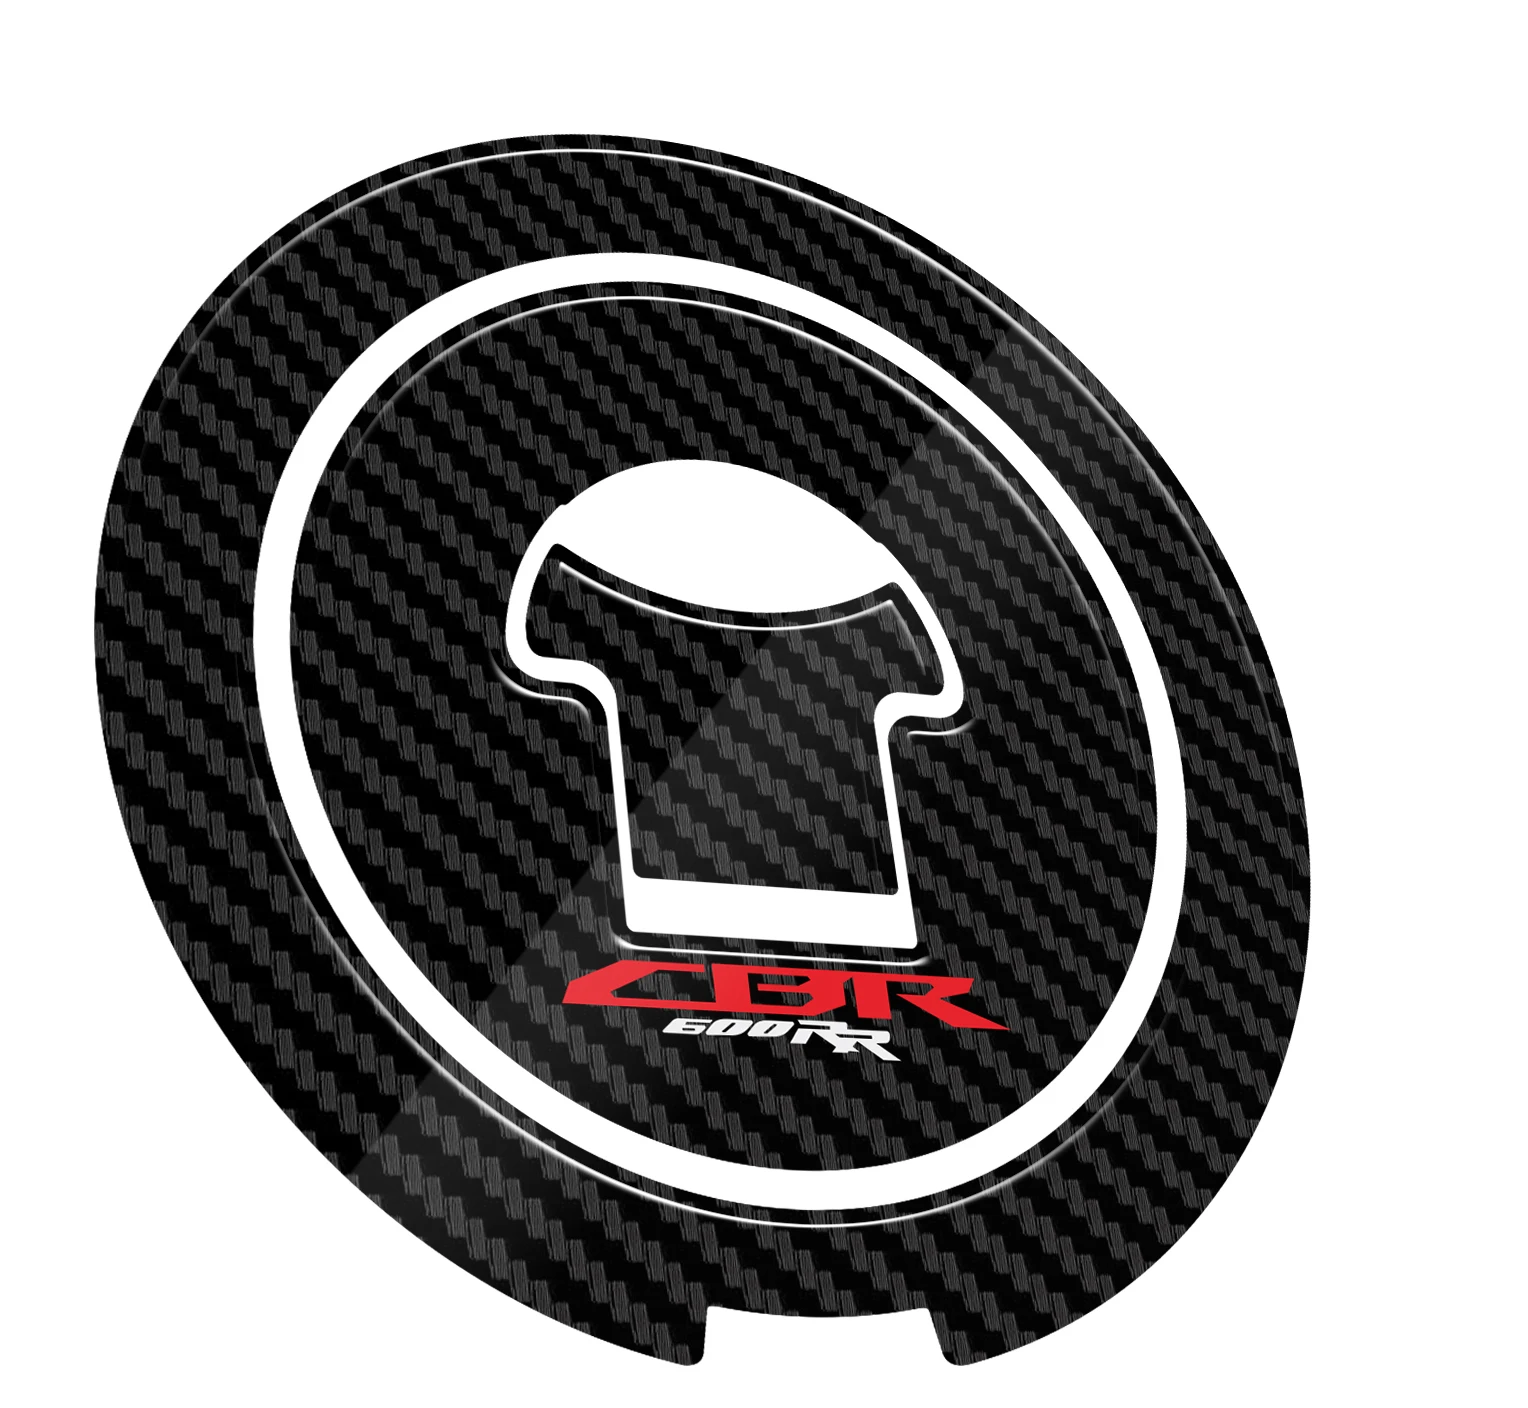 3D Carbon-look Motorcycle Fuel Gas Cap Protector Decals For HONDA CBR600 CBR600RR CBR 600RR 2003-2016 2004 2005 2007 2009 2008